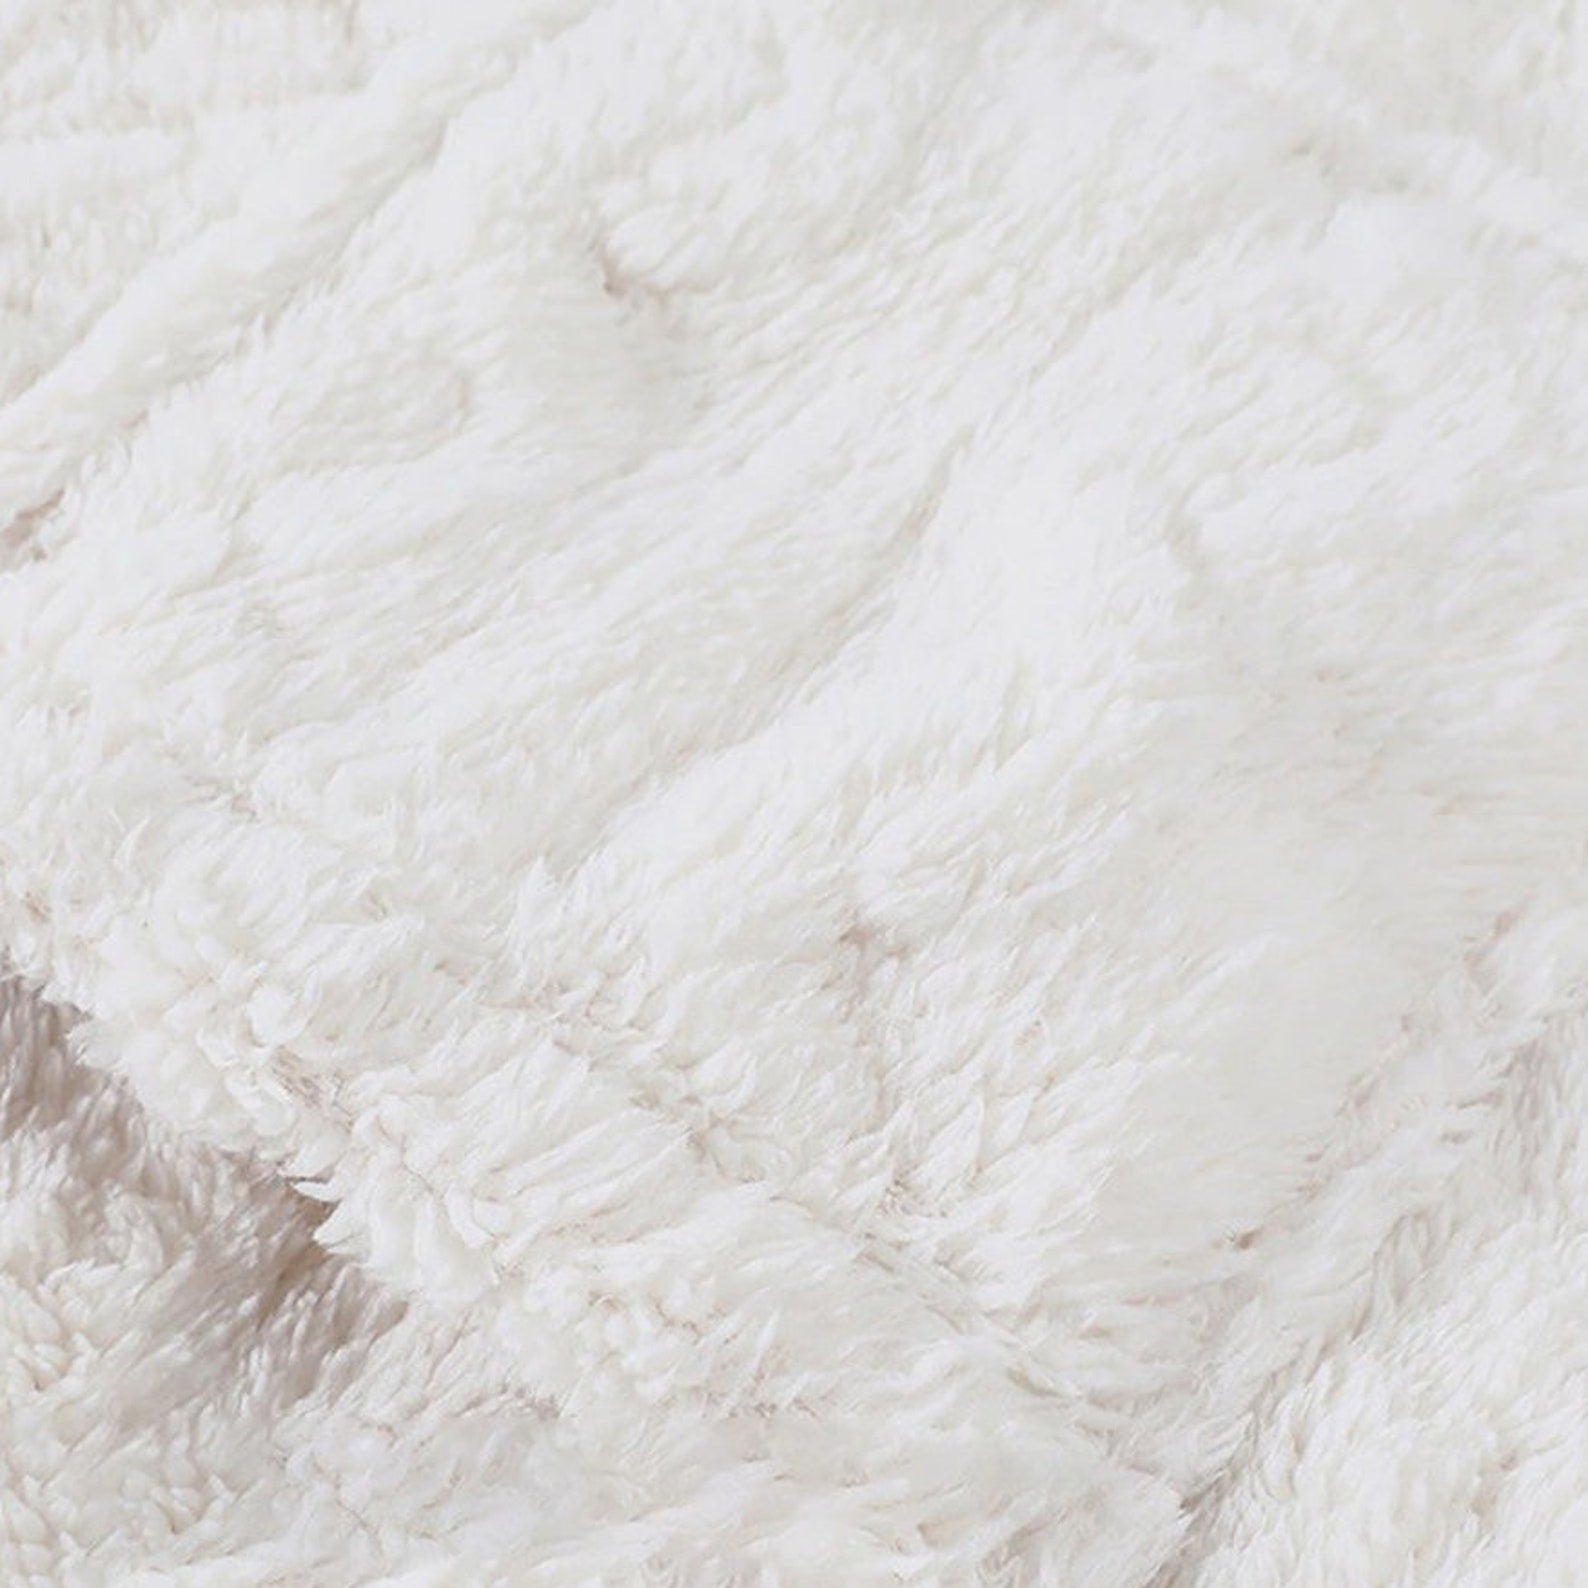 Ivory Fleece 2pc Set Pajama Set